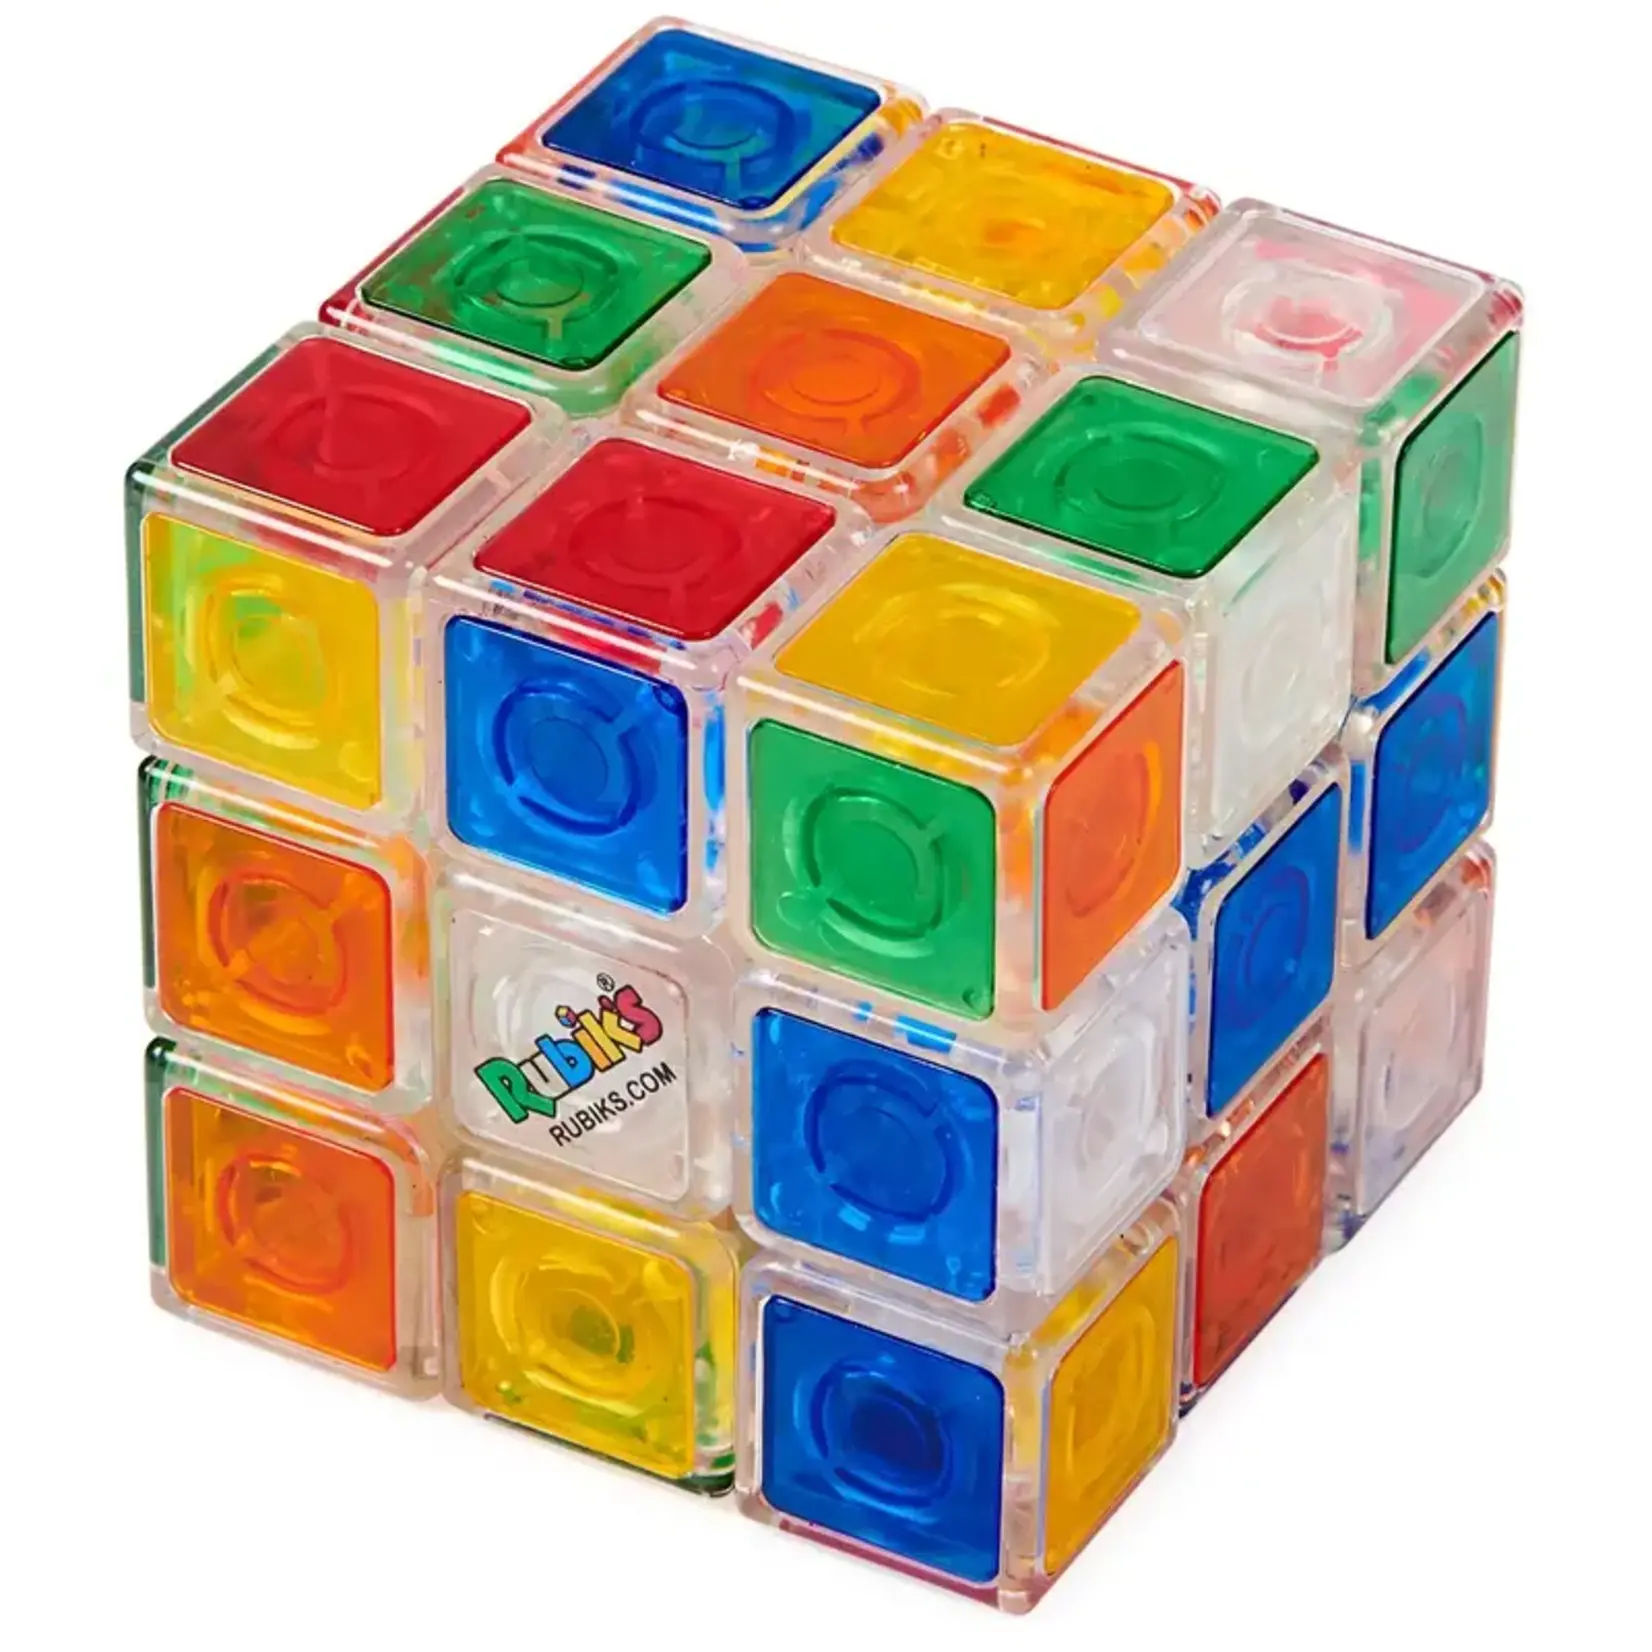 Rubik's Rubiks 3x3 Crystal Cube